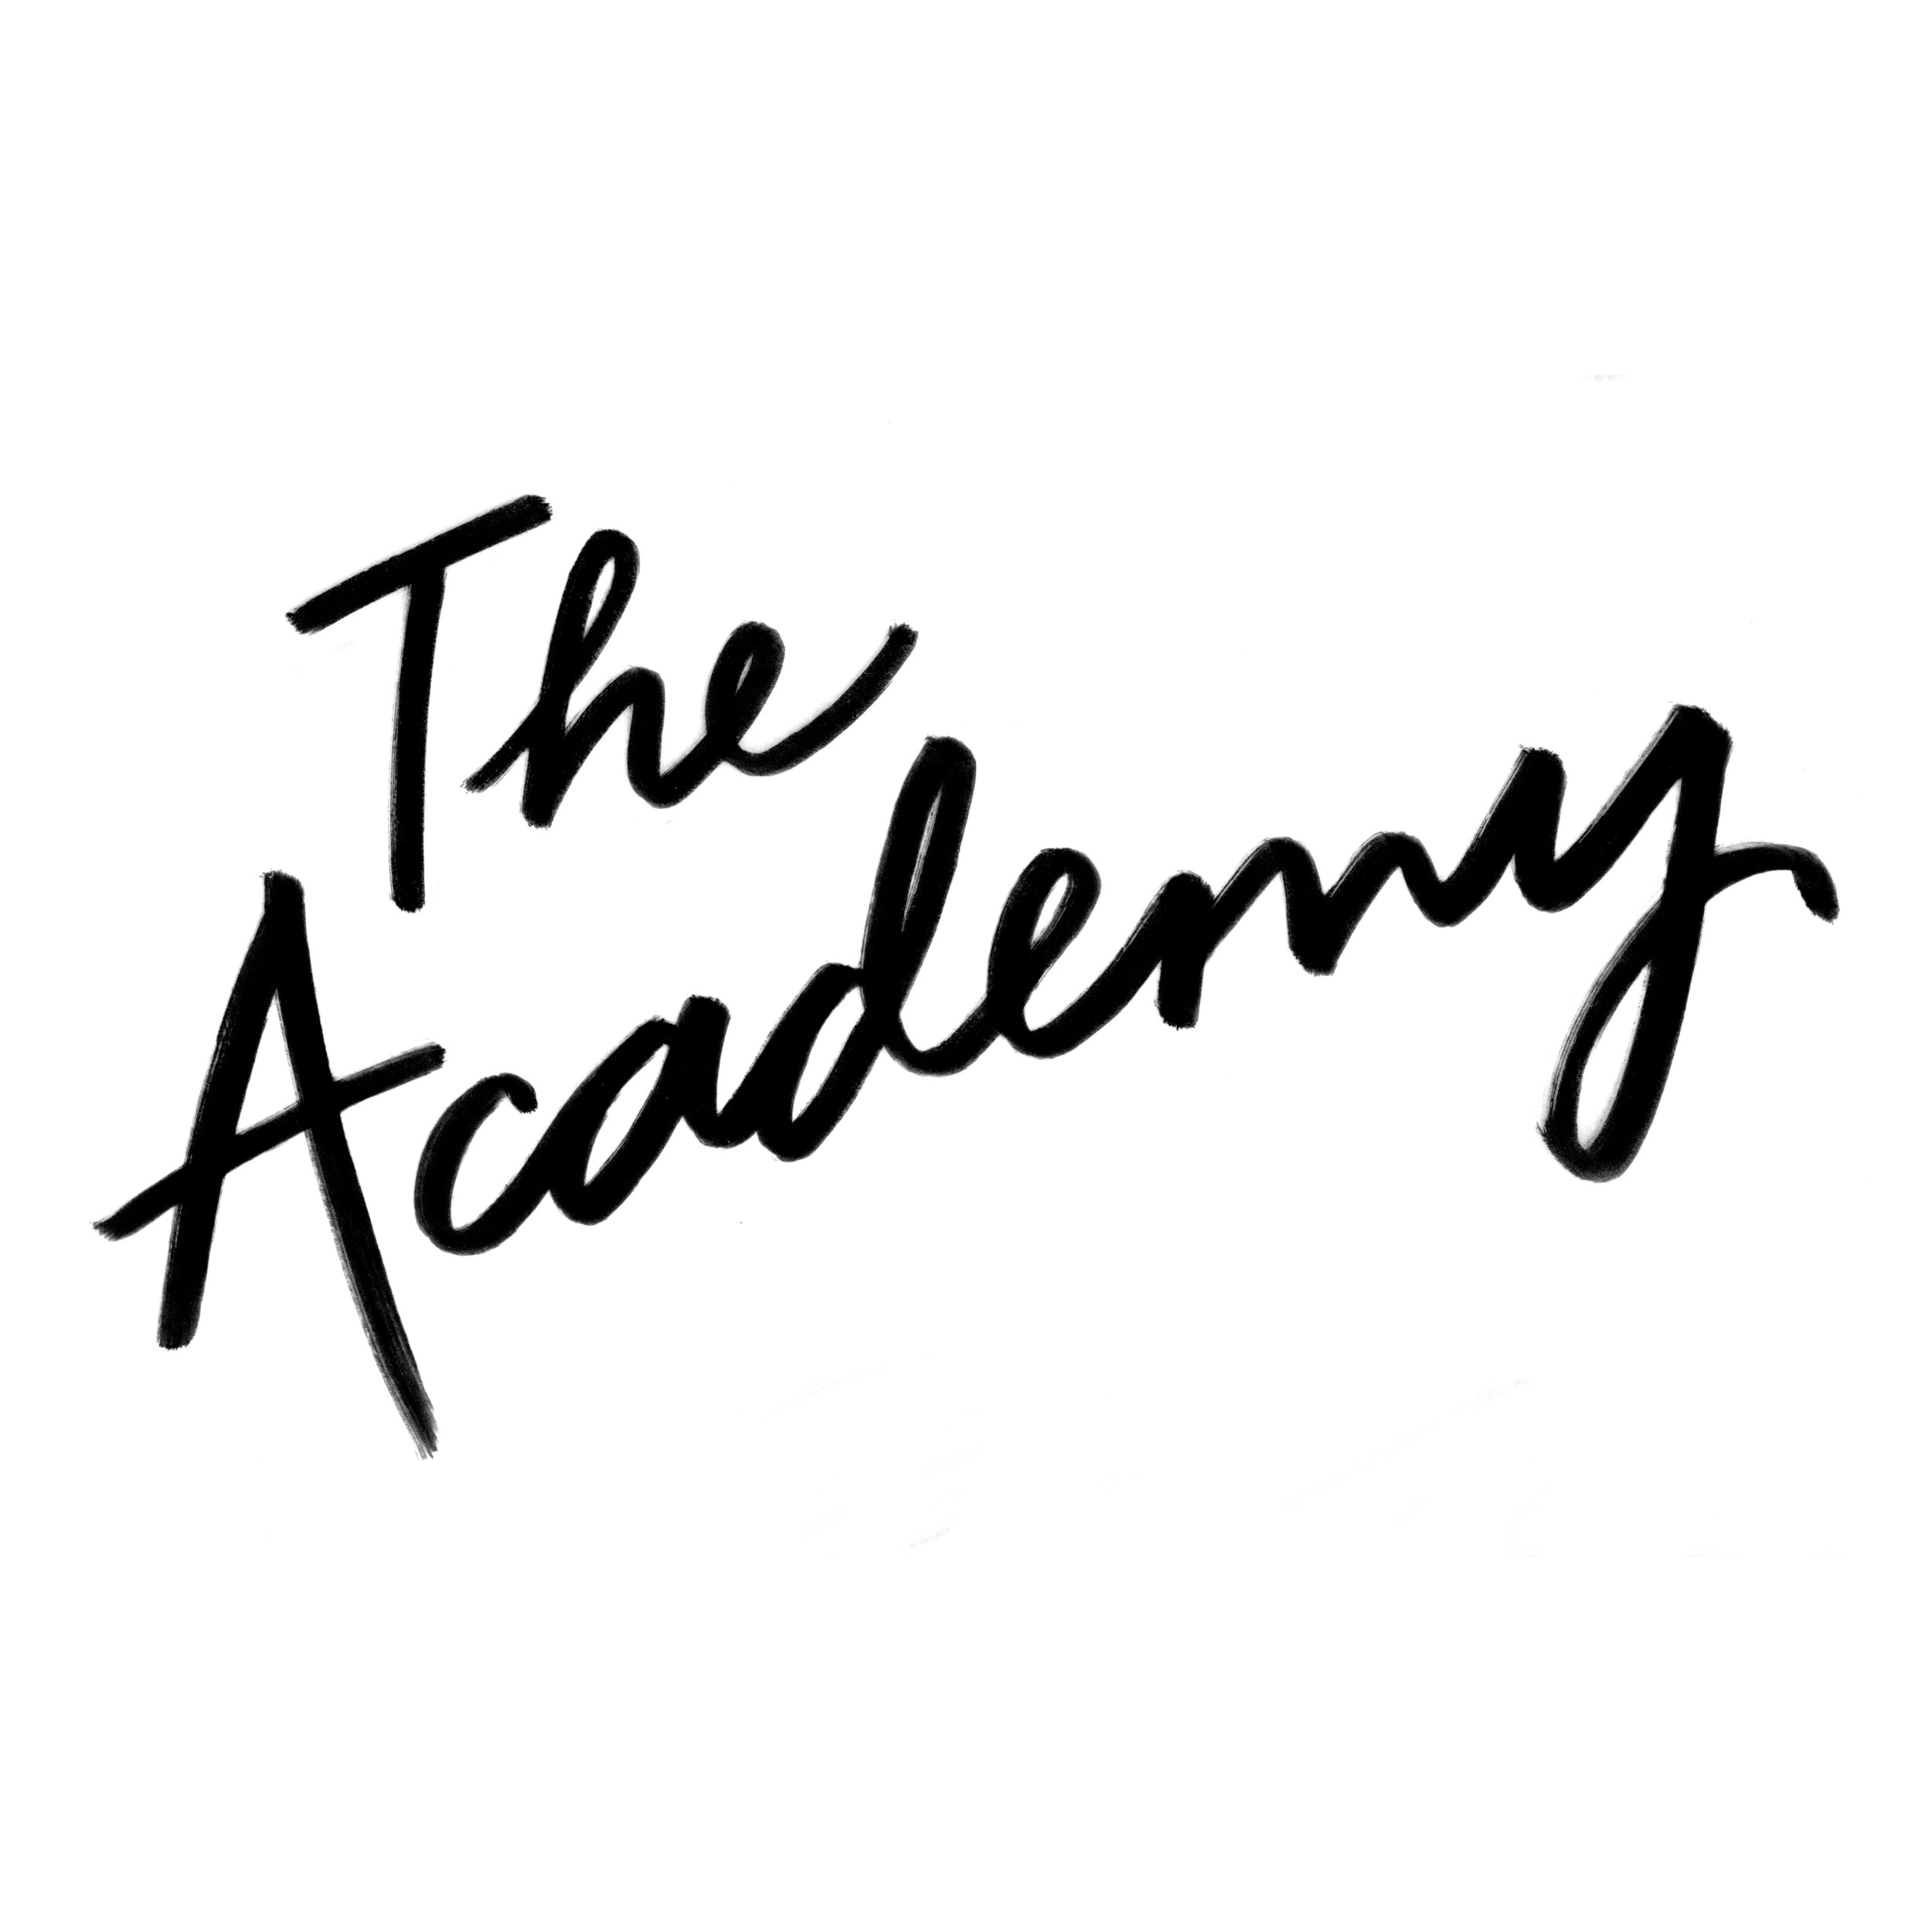 Academy_lettering.jpg